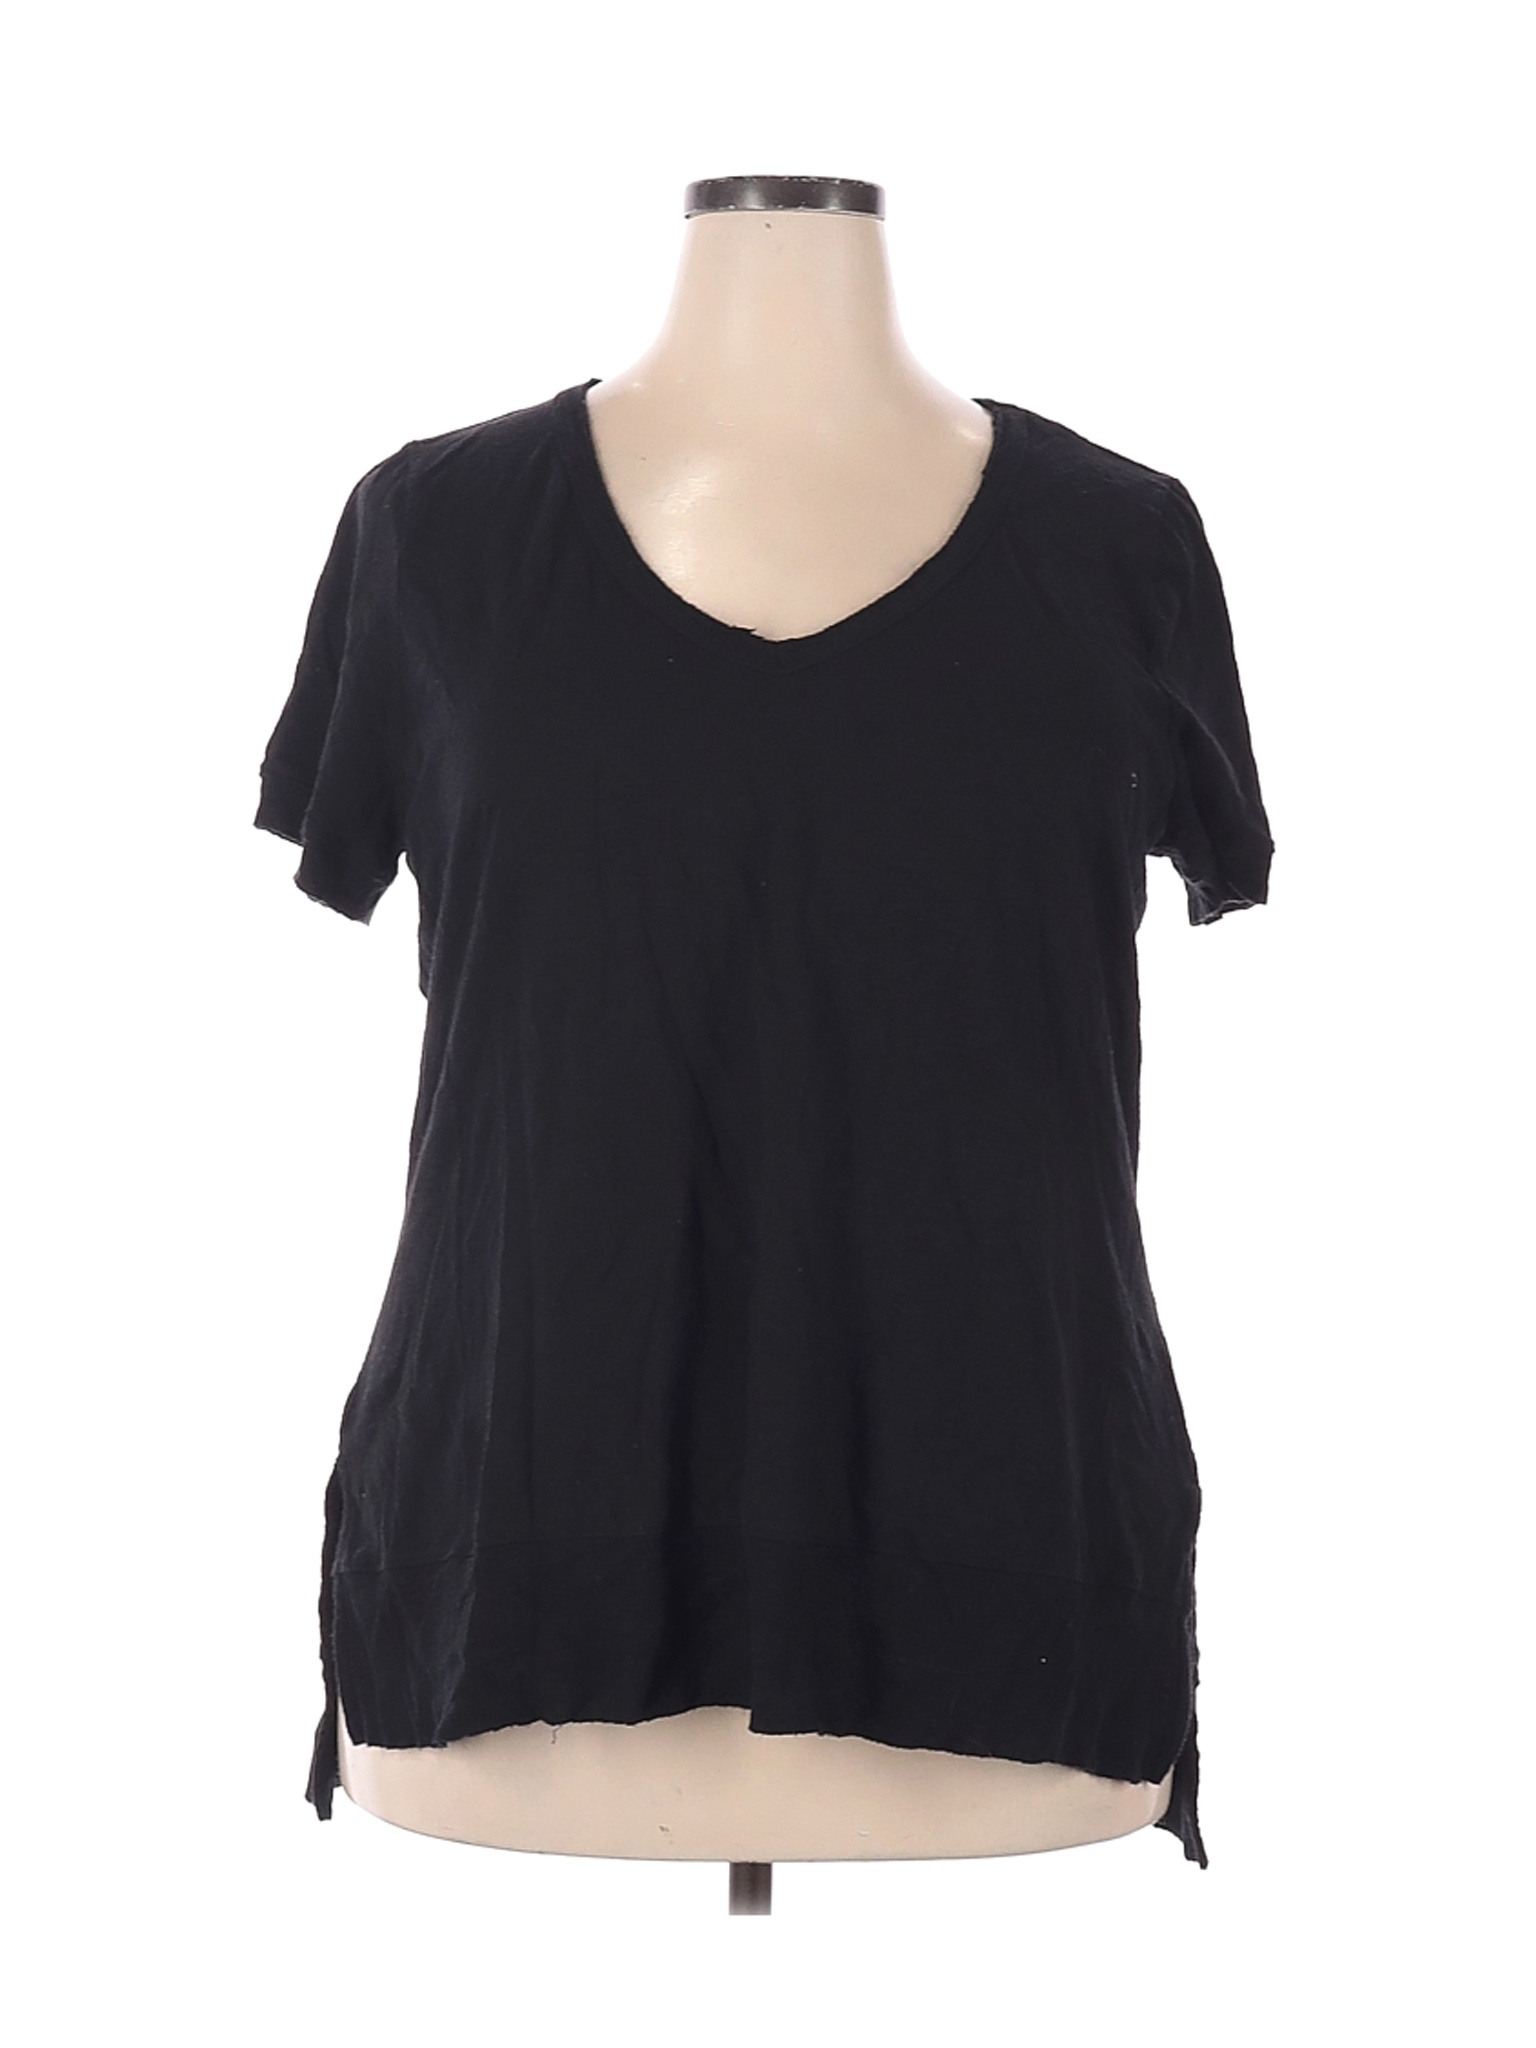 Lane Bryant Women Black Short Sleeve T-Shirt 18 Plus | eBay